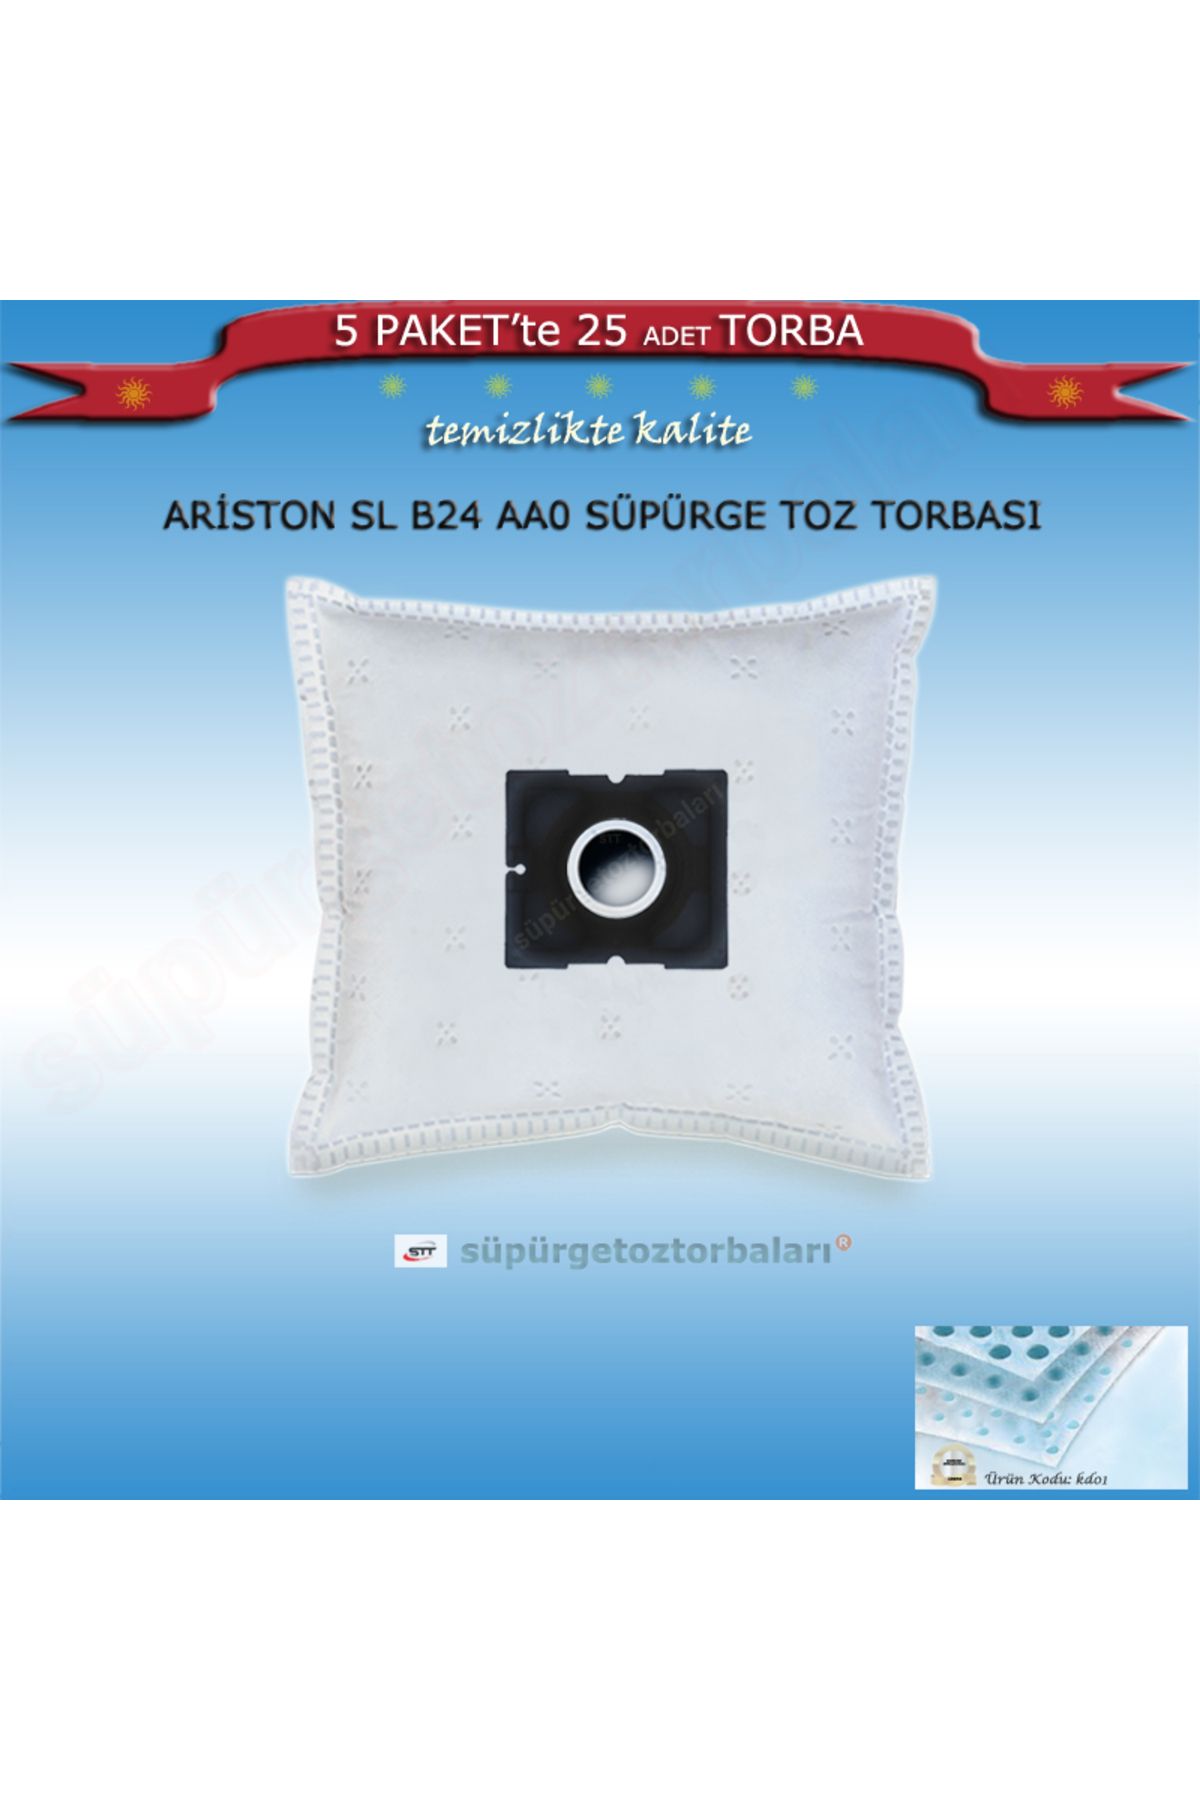 Ariston Sl B24 Aa0 Süpürge Toz Torbası 25 Adet Torba Kd01